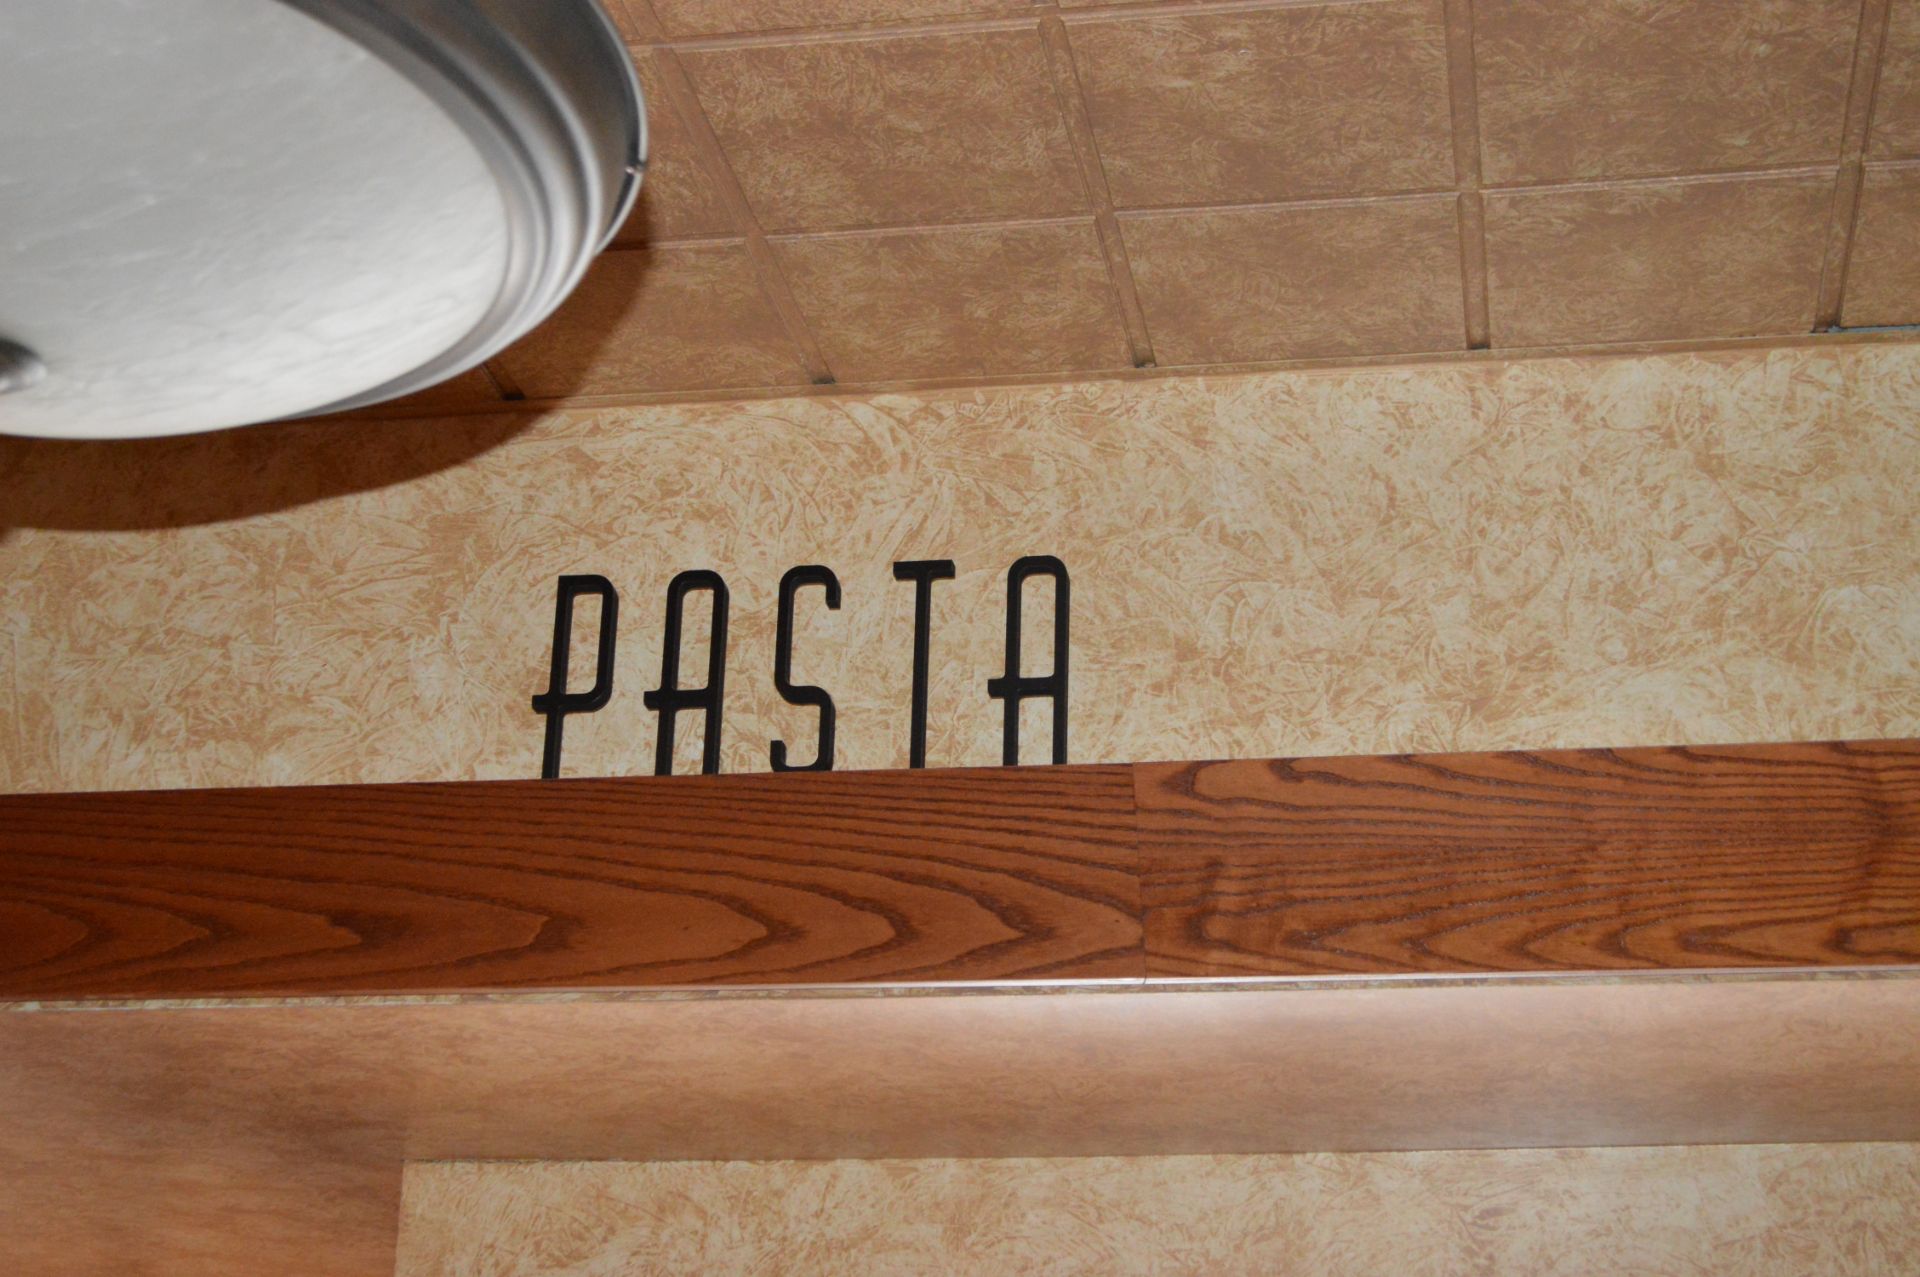 7 x Wooden Signs Suitable For Restaurants, Cafes, Bistros etc - Includes Pasta, Lasagne, - Image 7 of 9